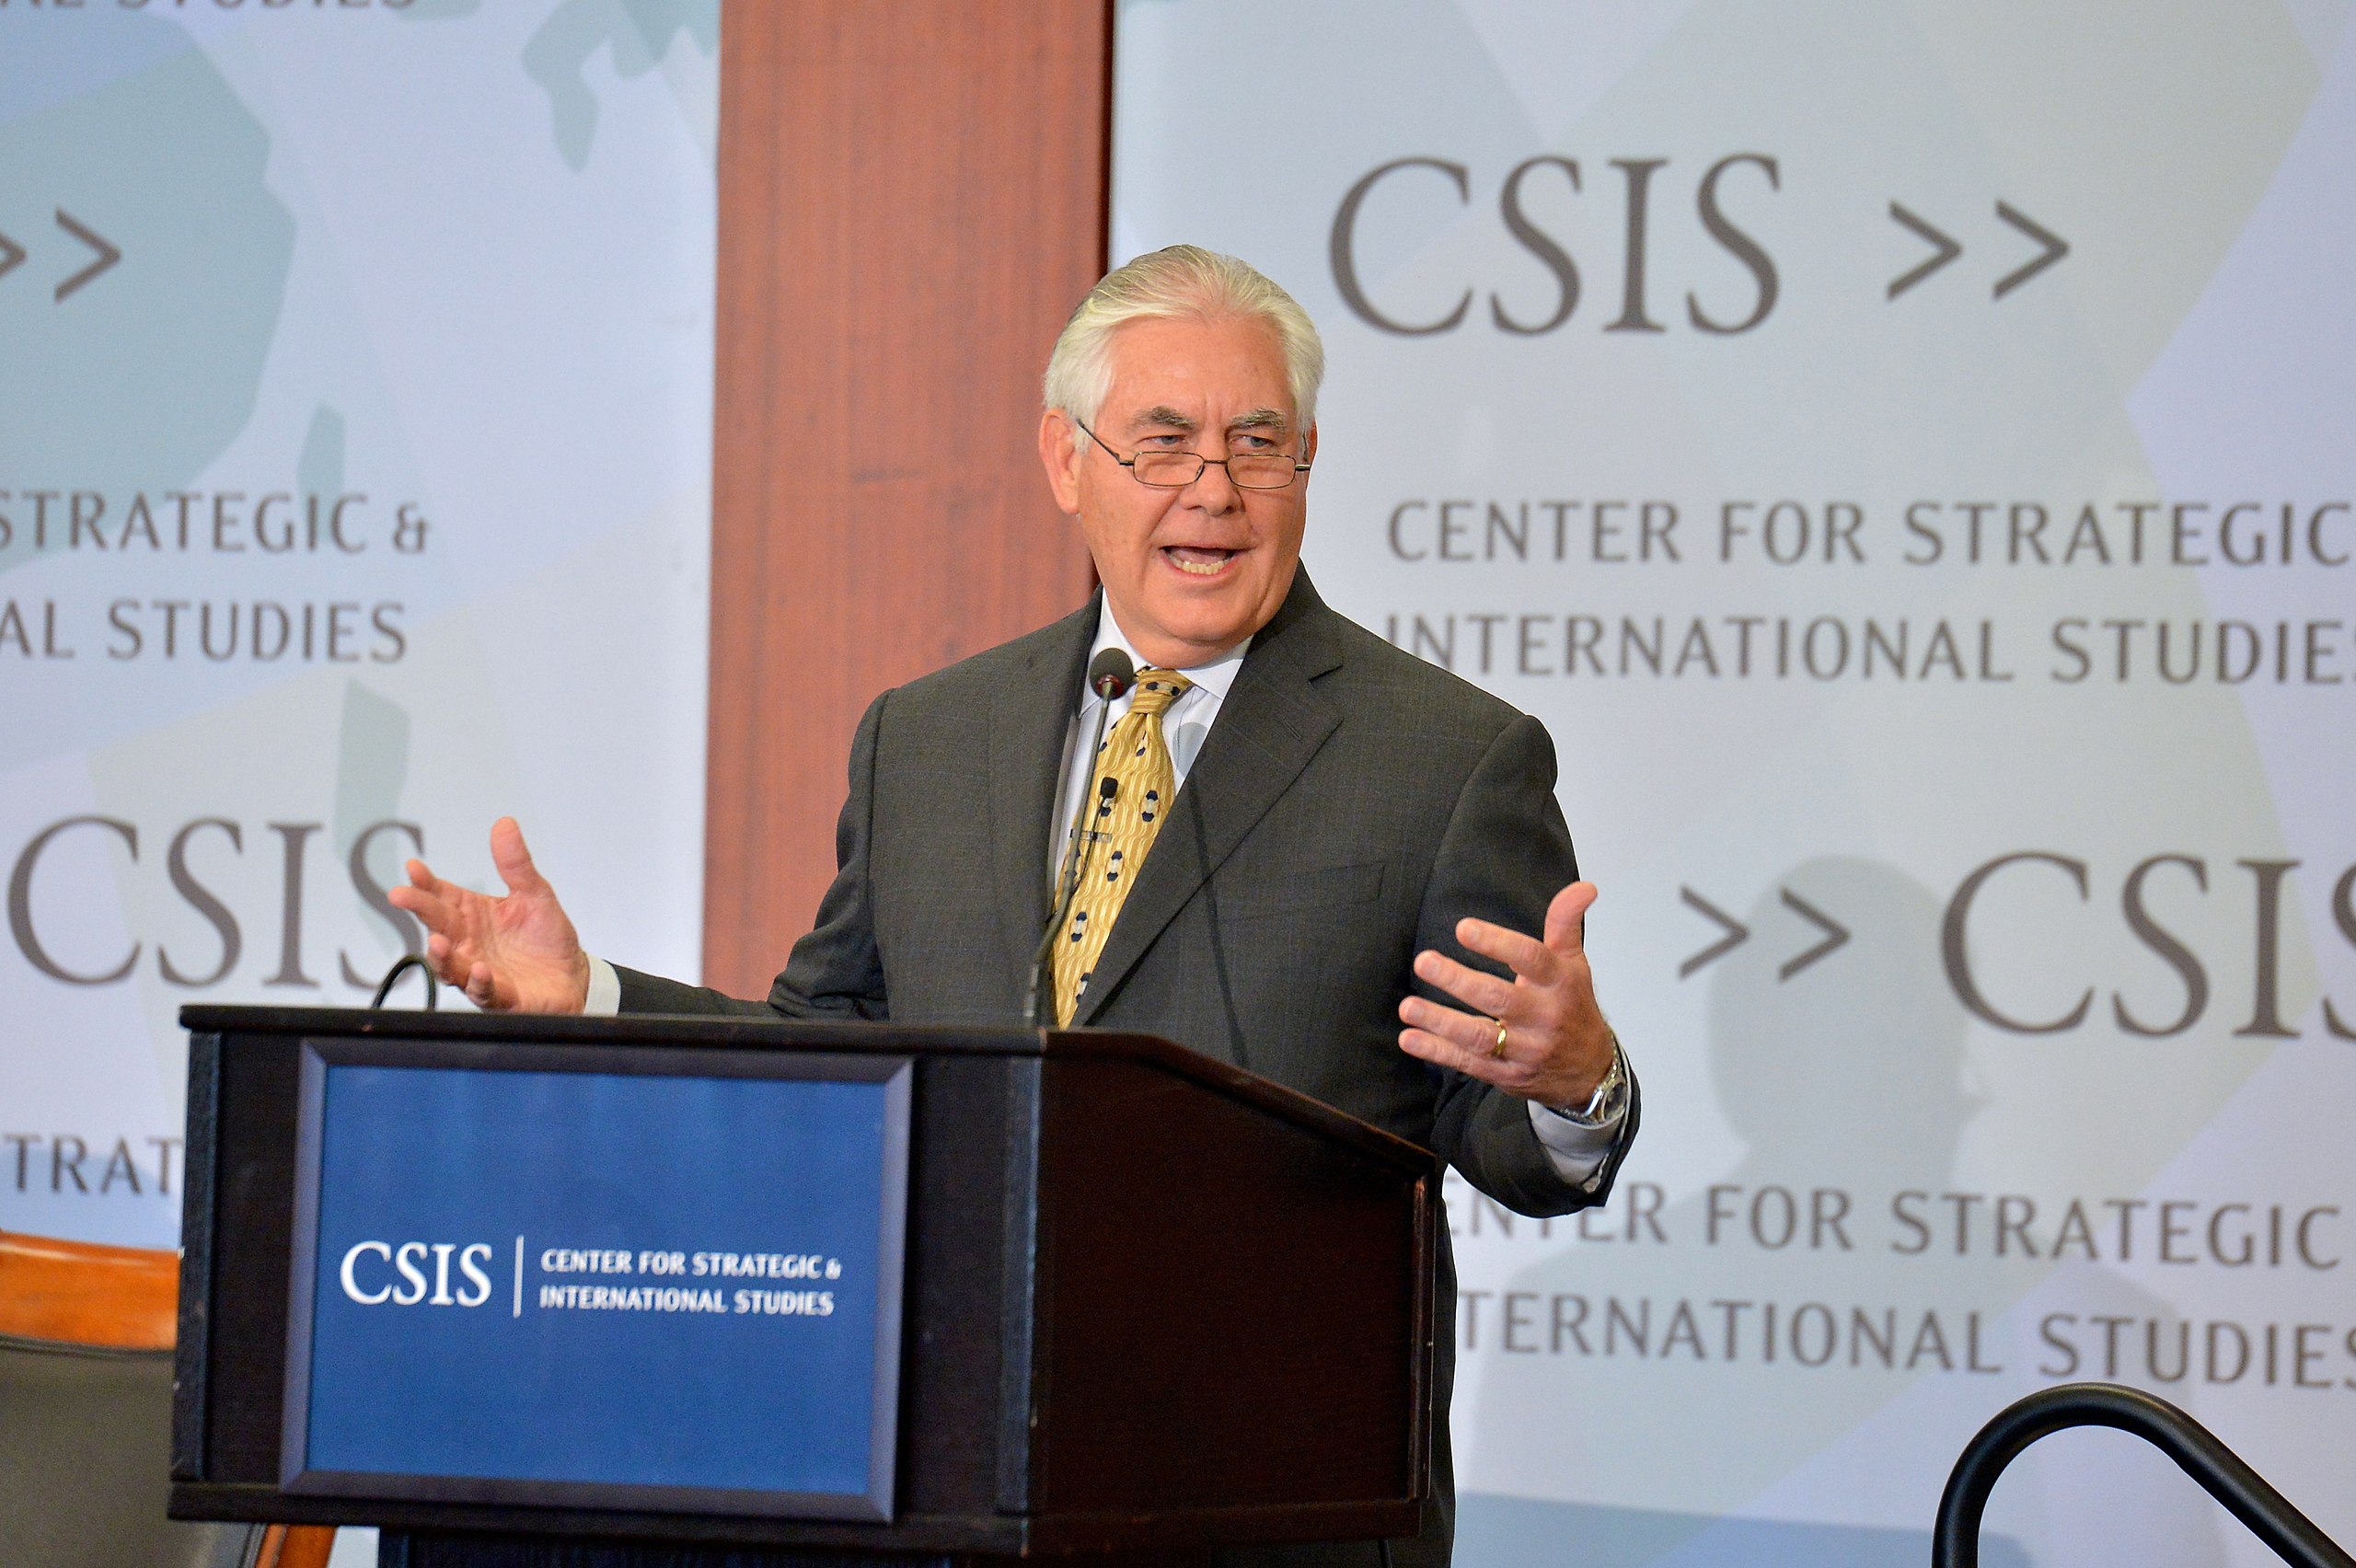 CSIS, Center for Strategic & International Studies